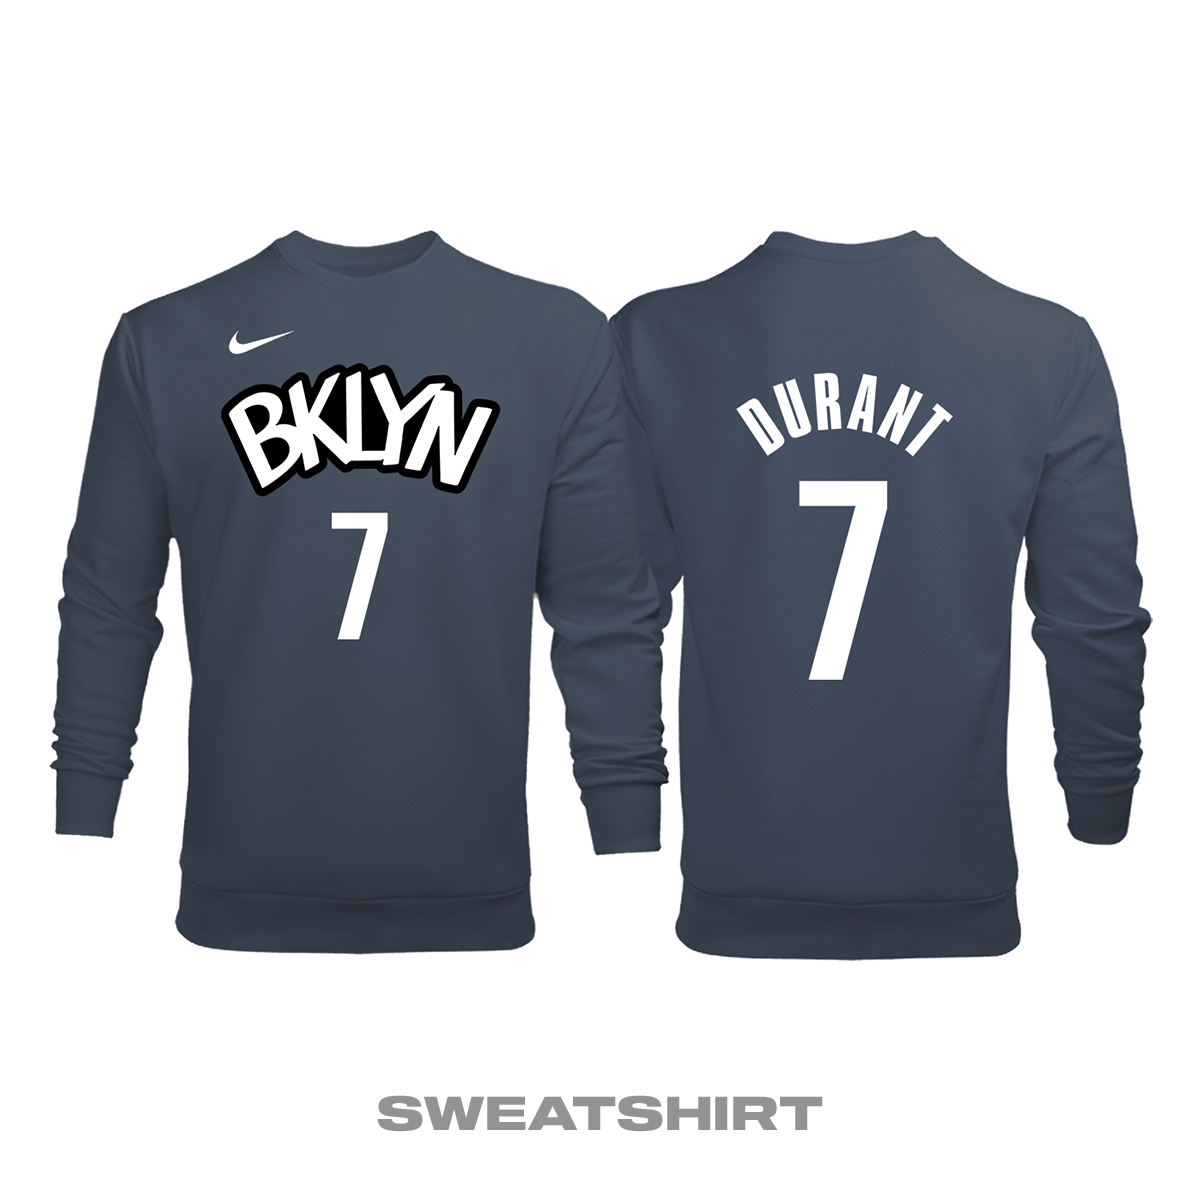 Brooklyn Nets: Statement Edition 2019/2020 Sweatshirt